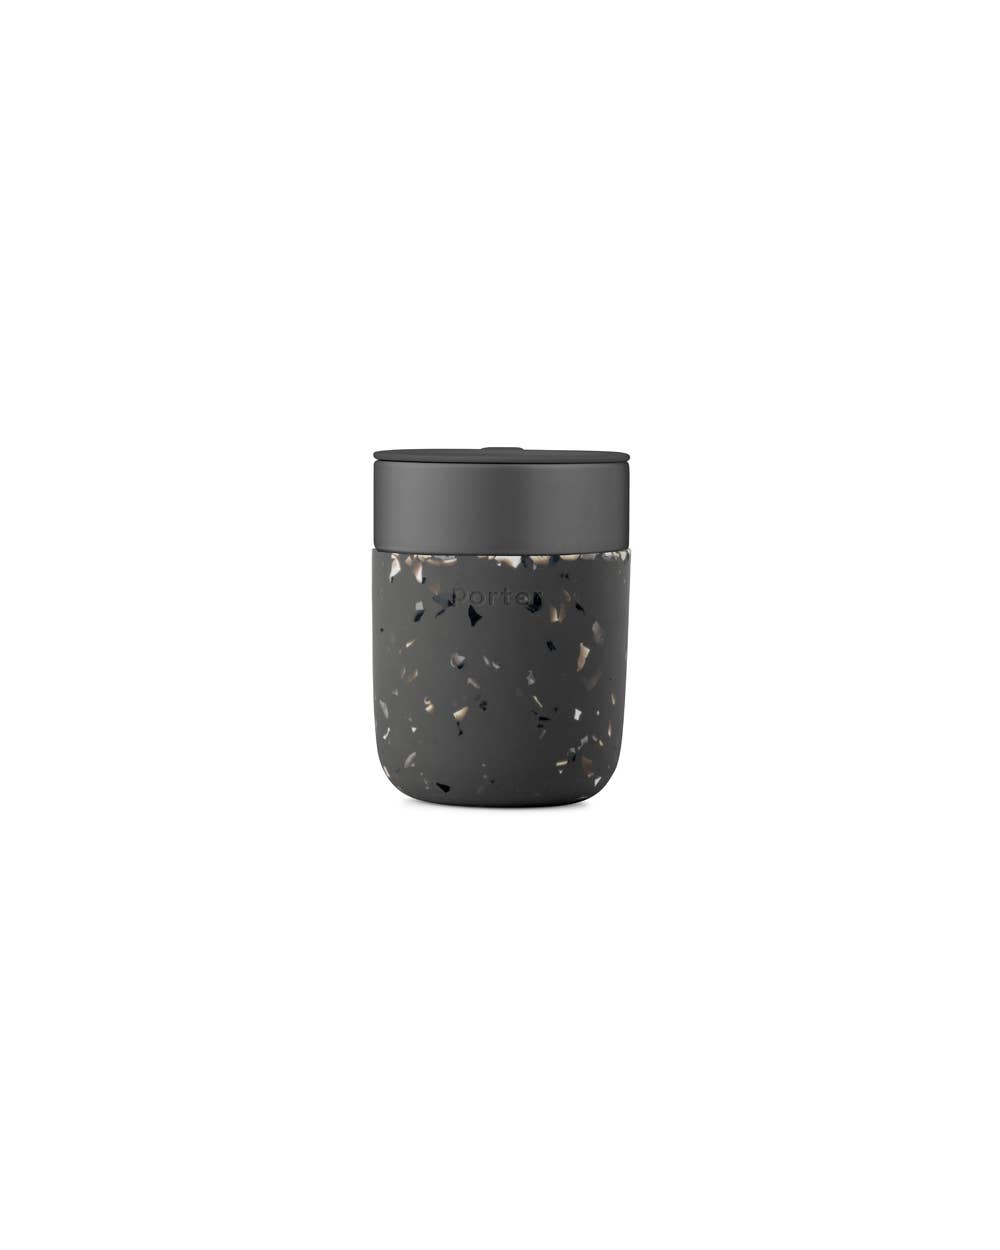 Porter Ceramic Reusable Coffee Mug 12oz - Terrazzo  W&P   -better made easy-eco-friendly-sustainable-gifting